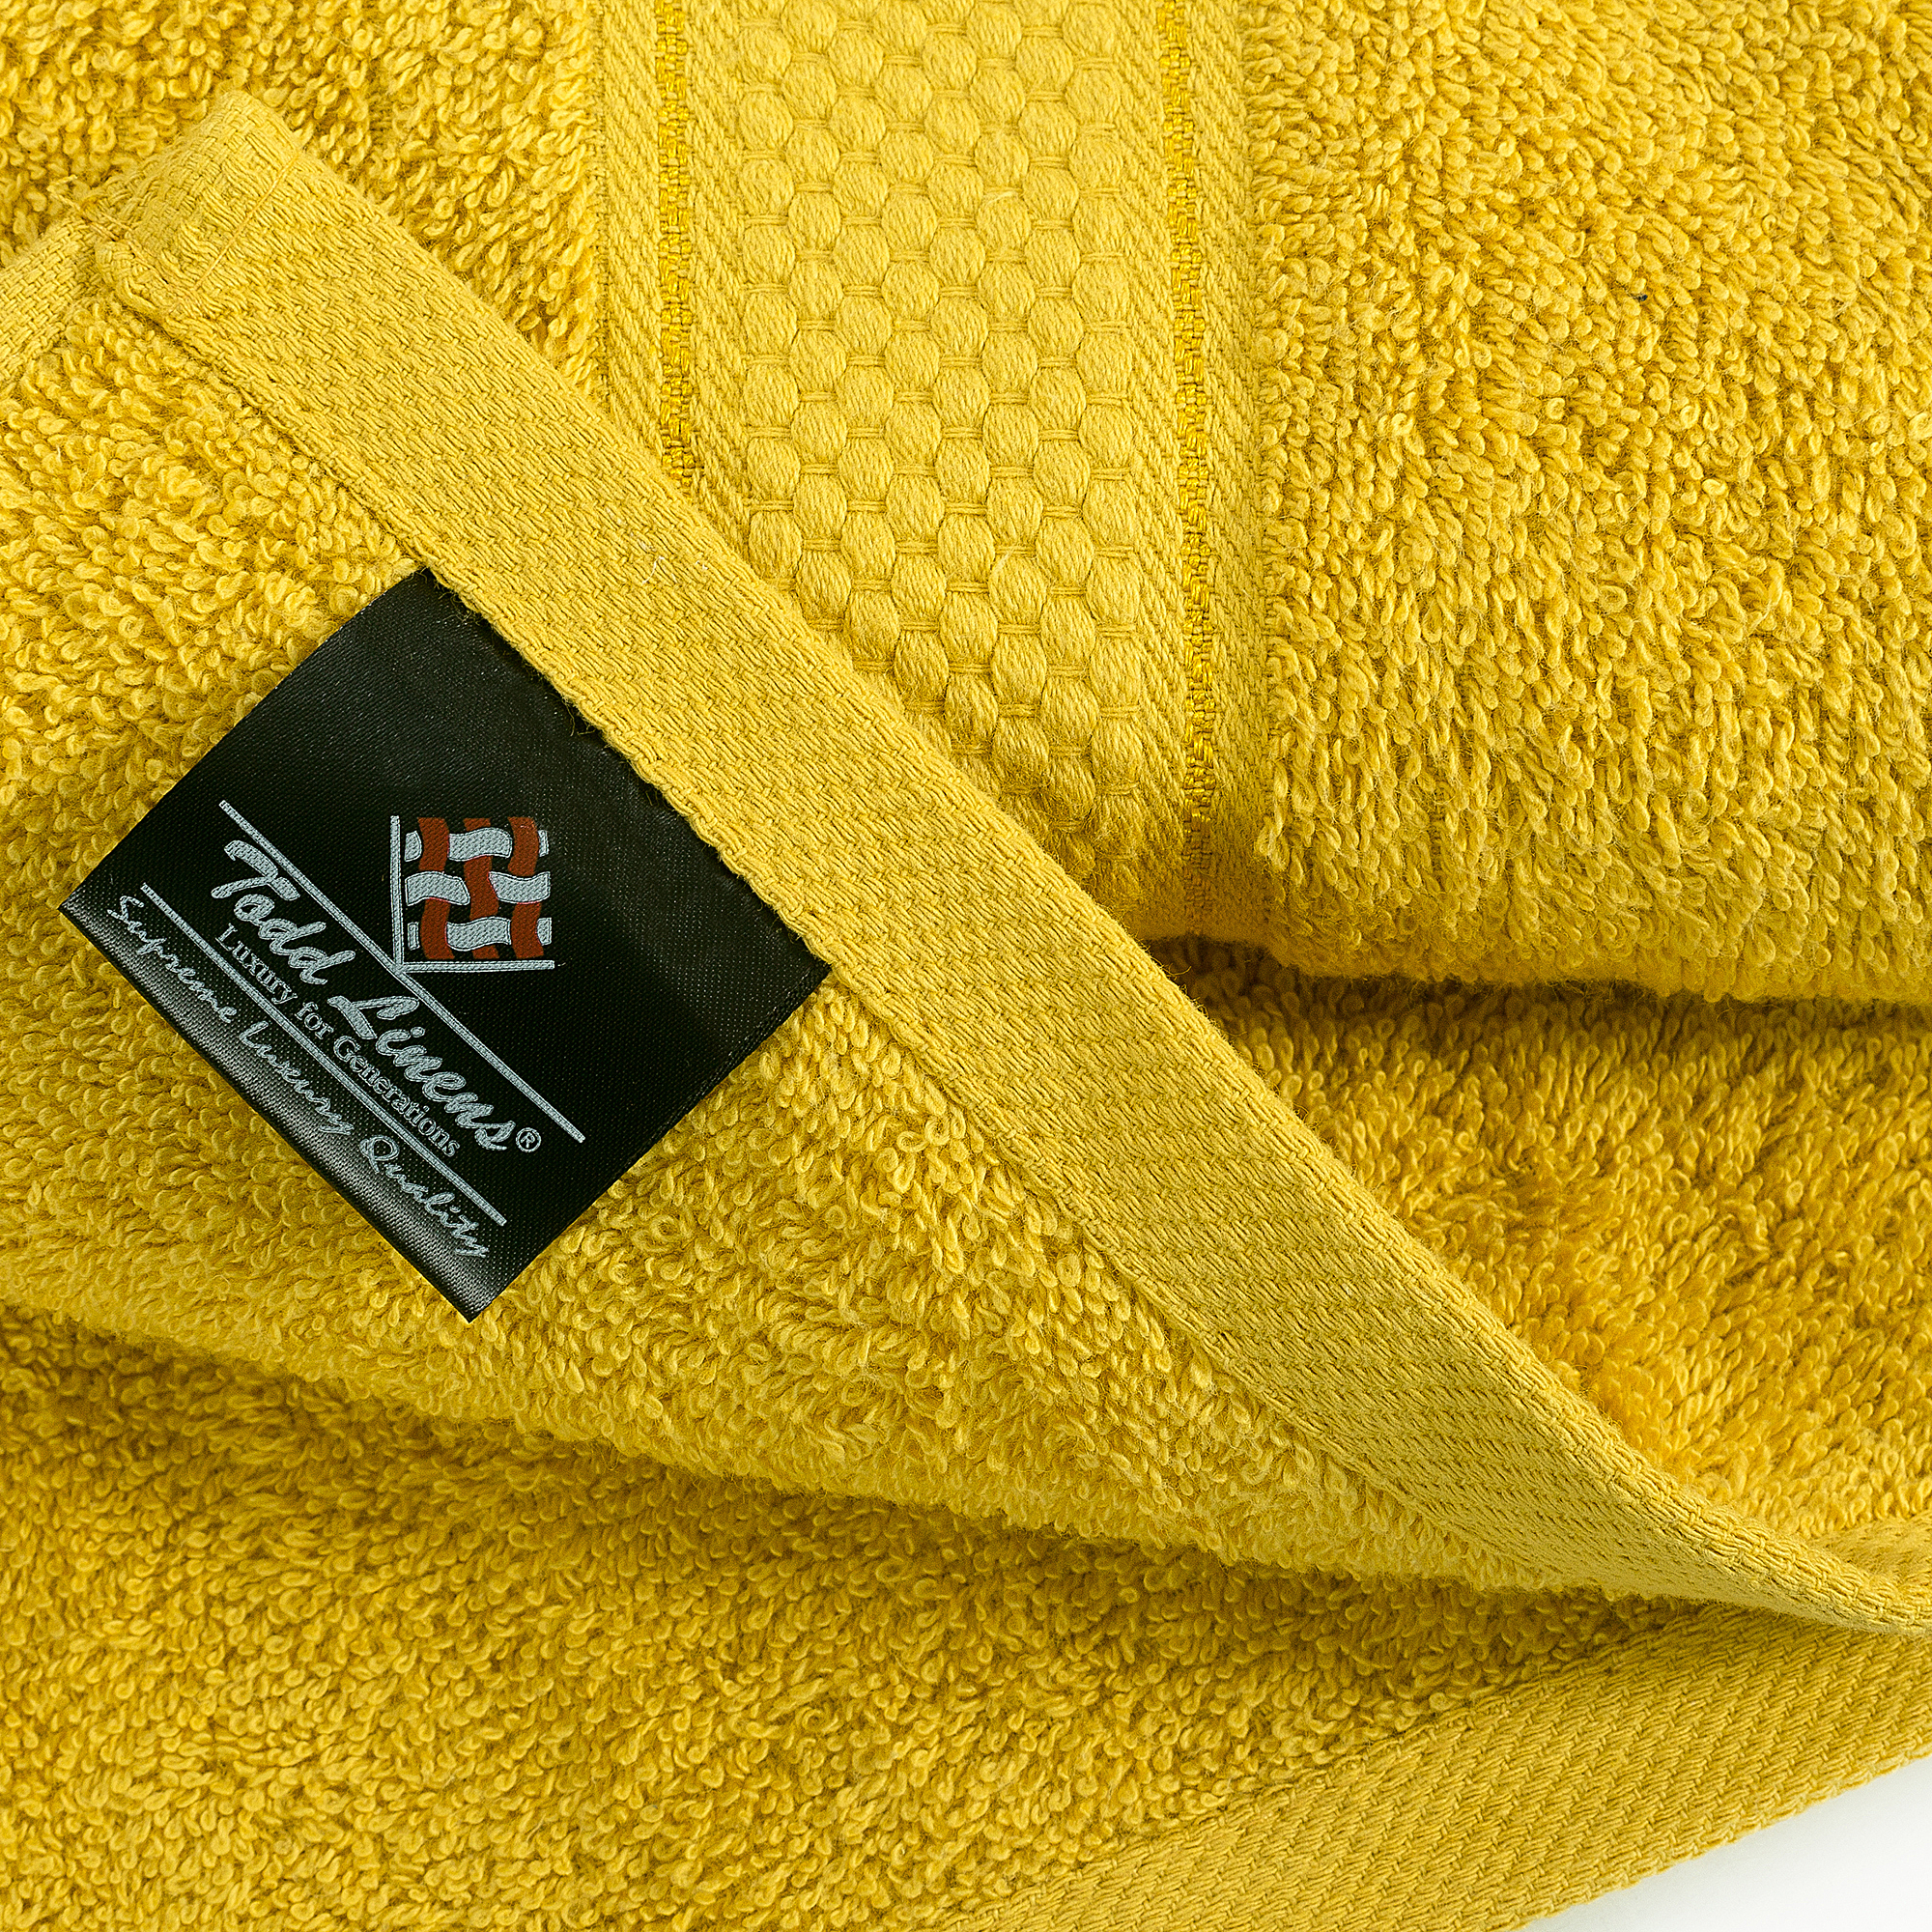 Bale Set 4pcs Mustard Plain Hand Towel